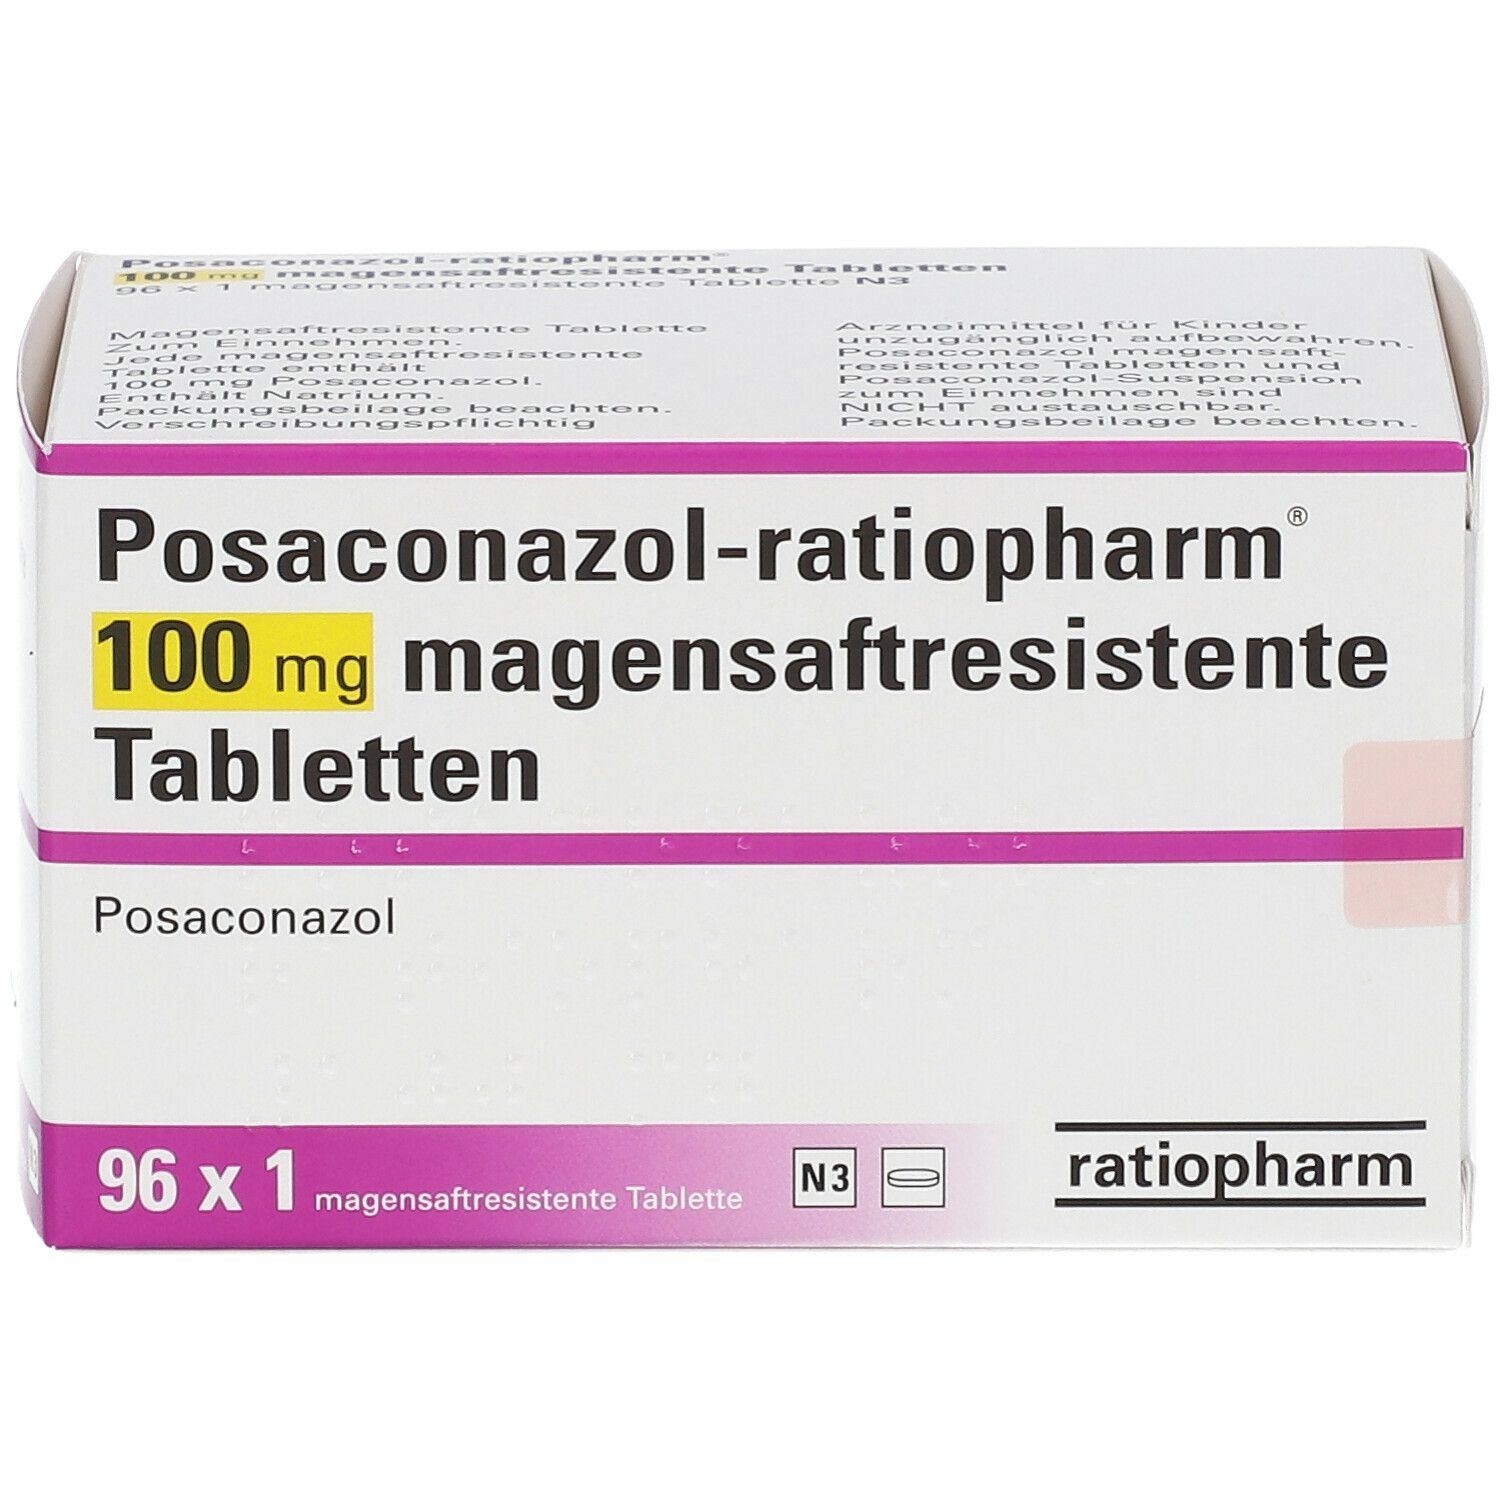 Posaconazol-ratiopharm® 100 mg